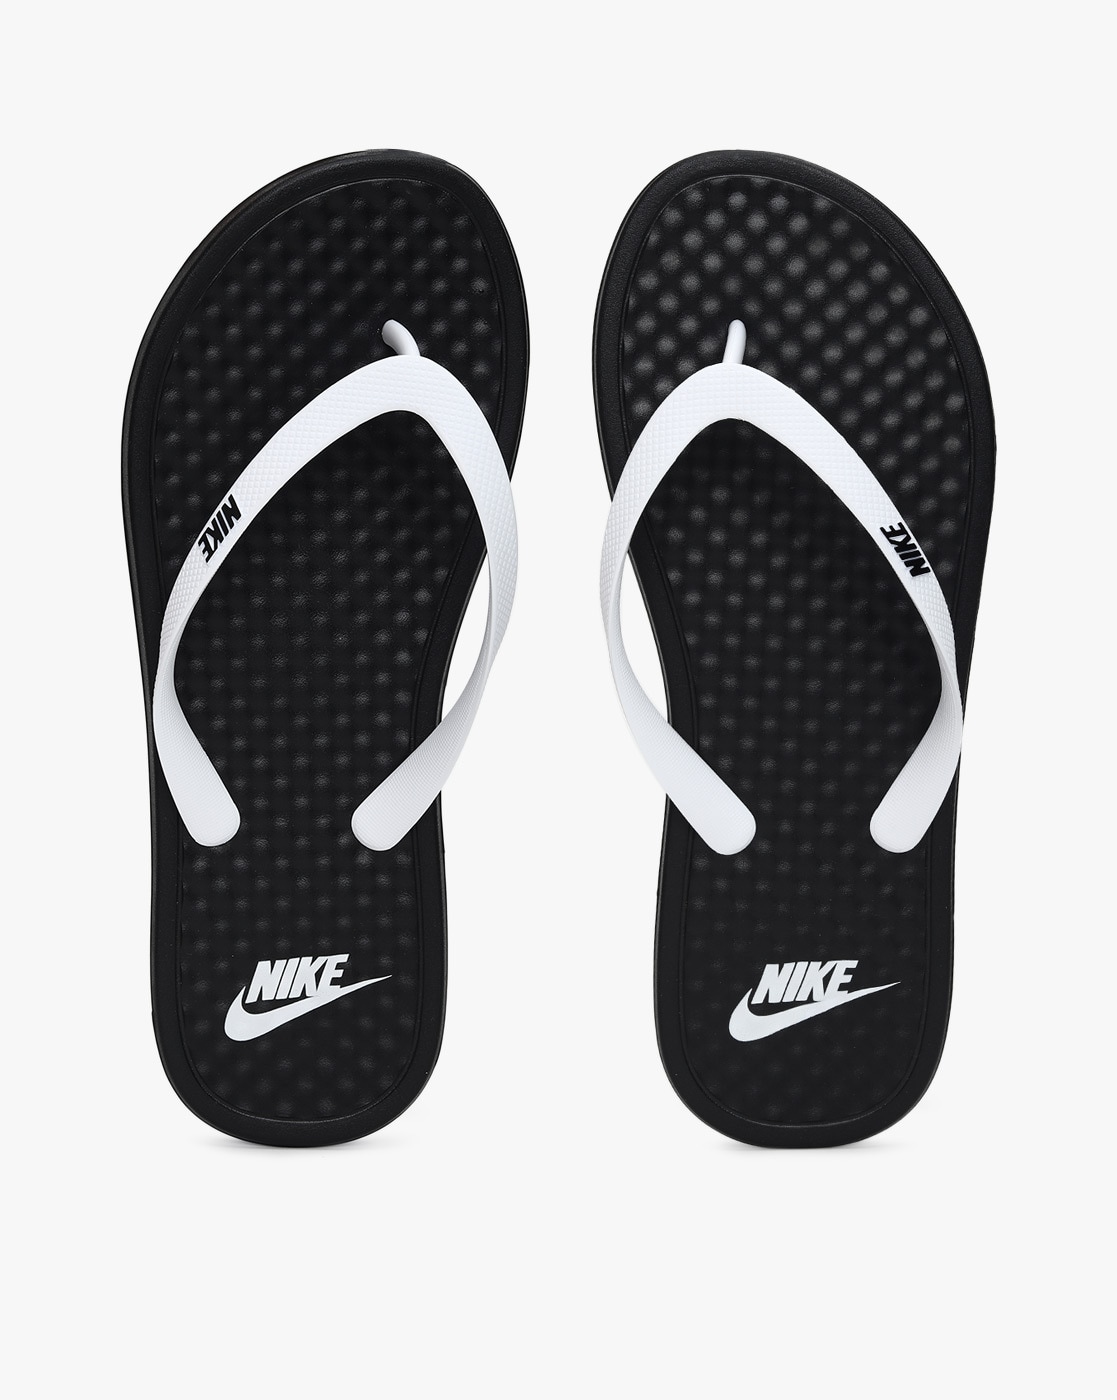 Nike Slippers Flip Flop | solucoesmg.com.br